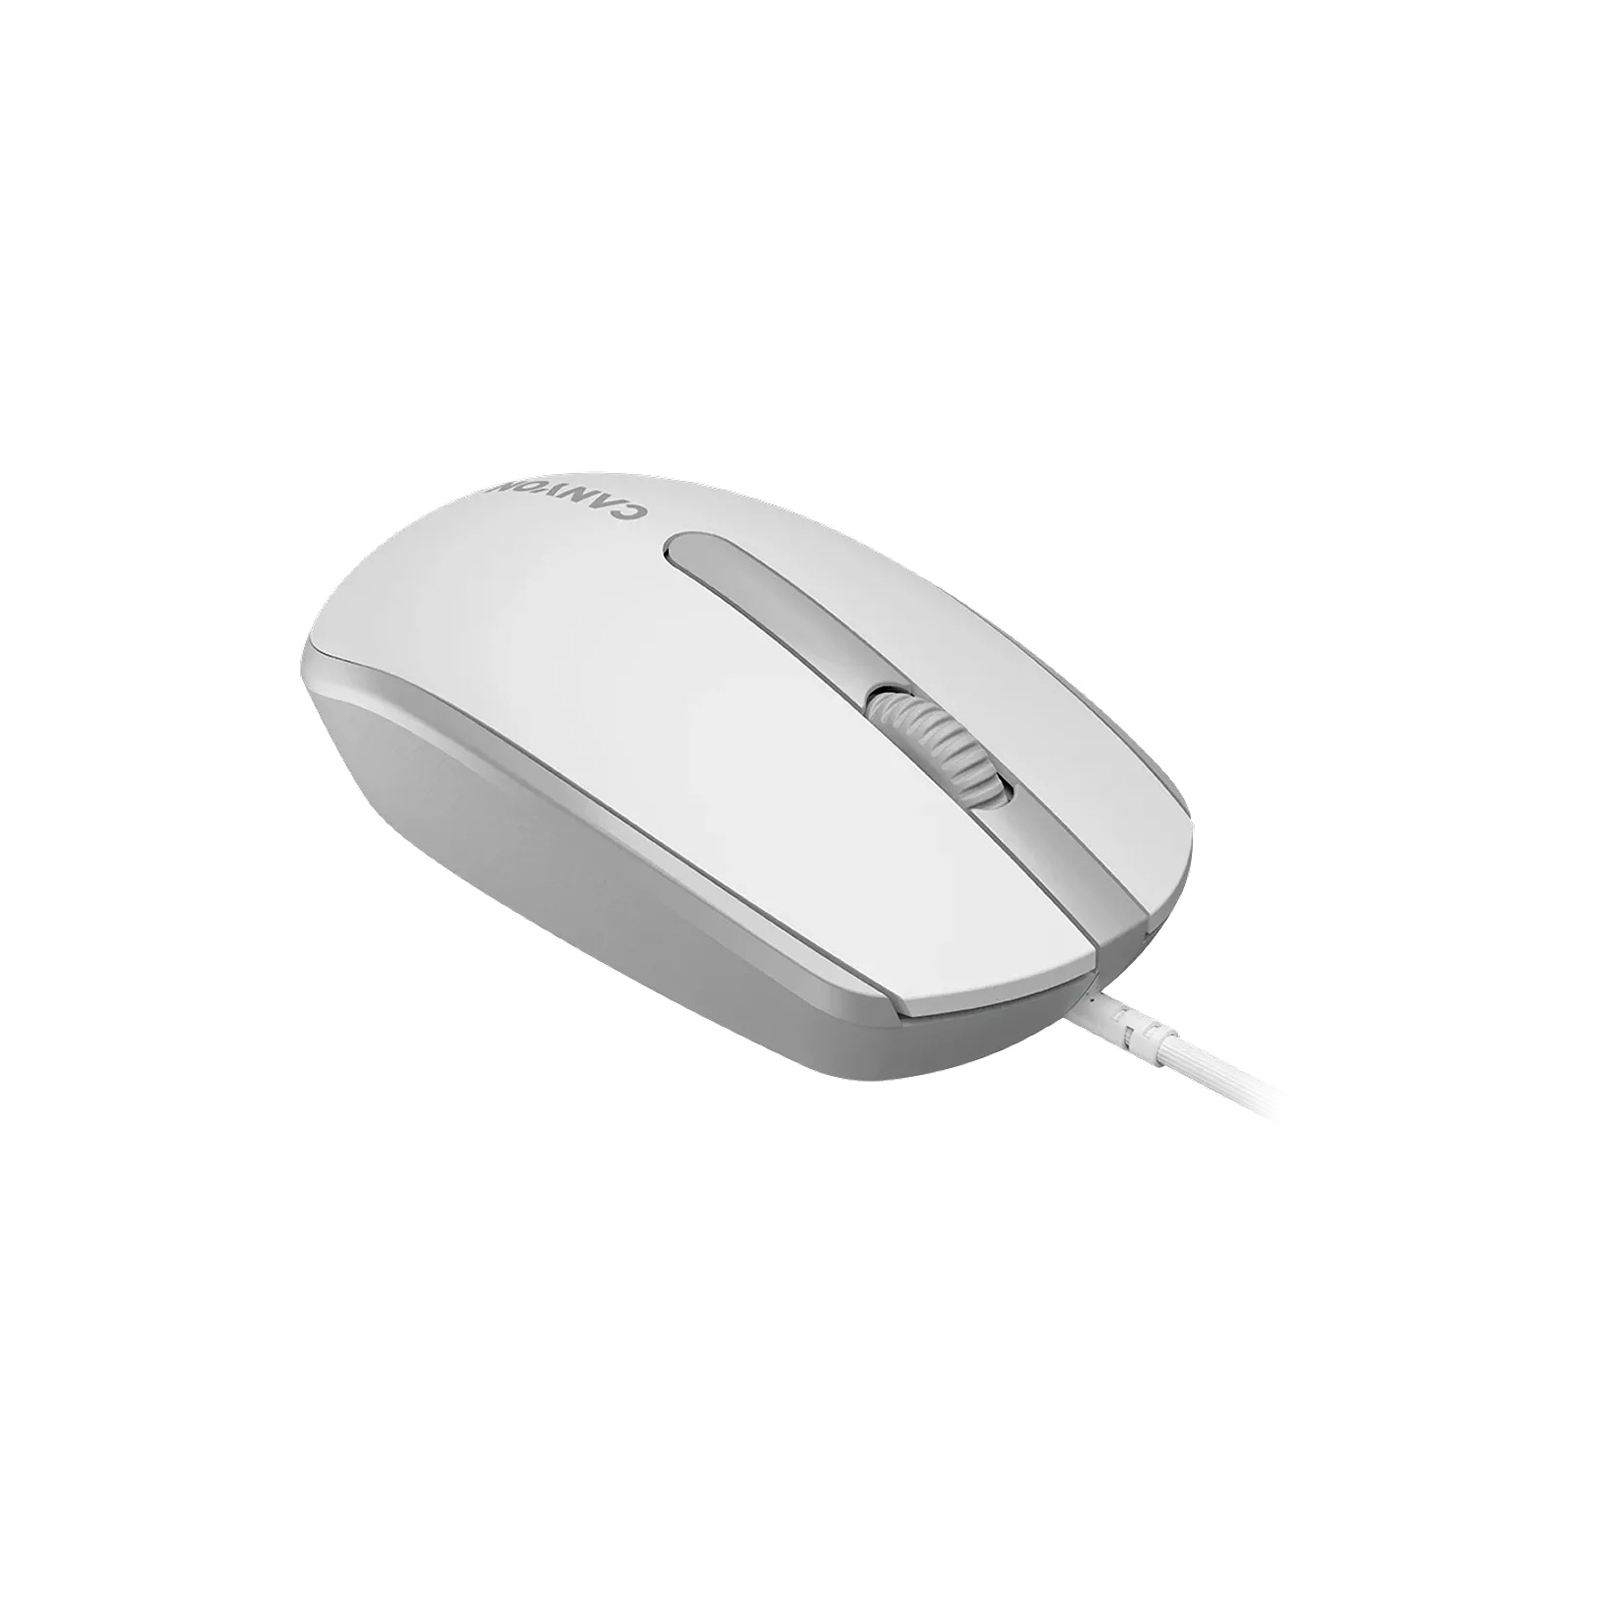 Мышка Canyon M-10 USB White Lavender (CNE-CMS10WL) изображение 5